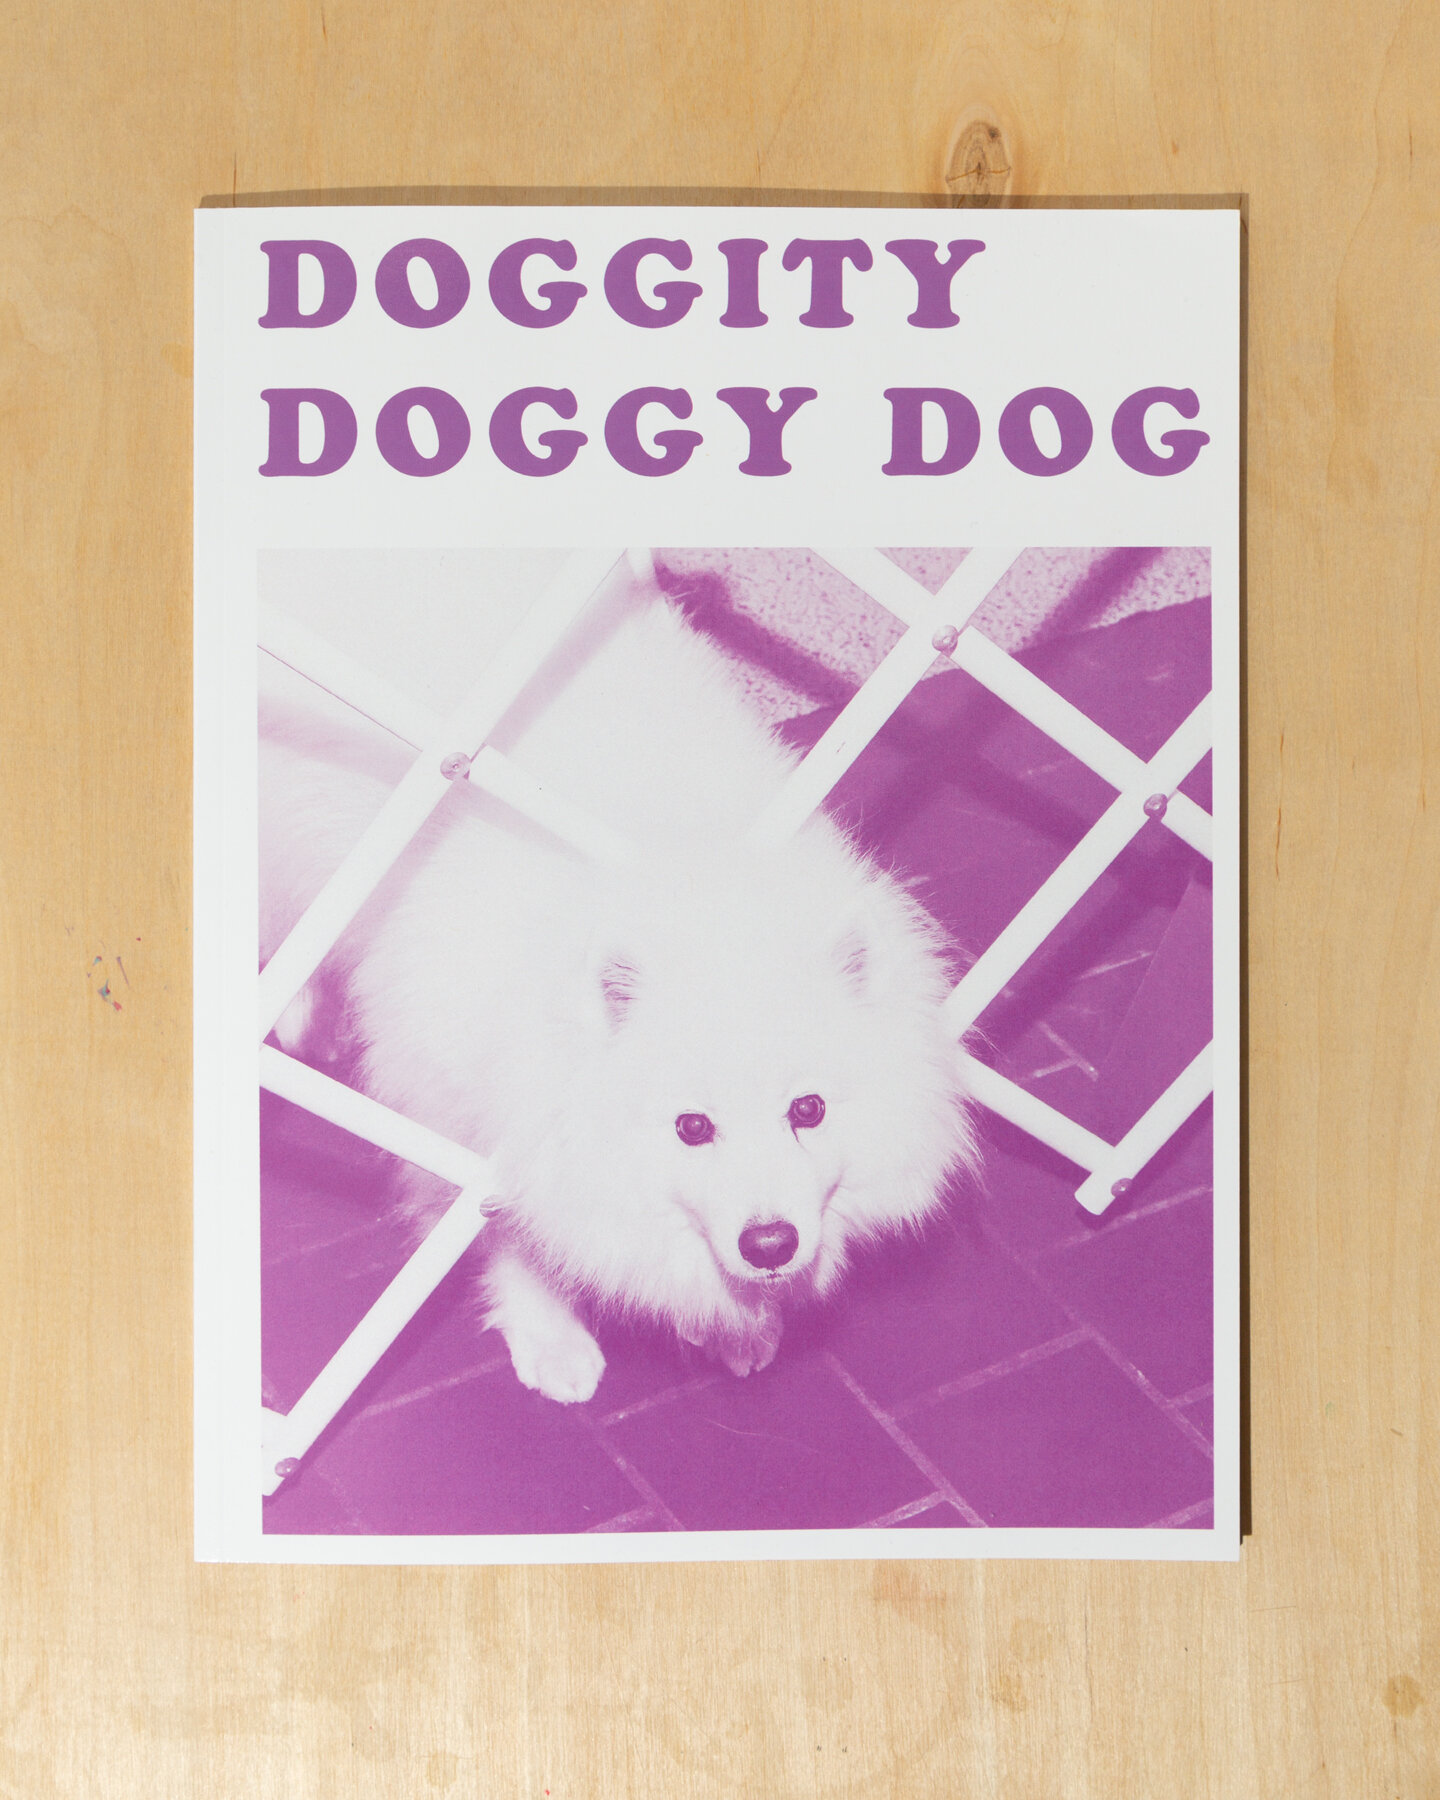 Doggity Doggy Dog